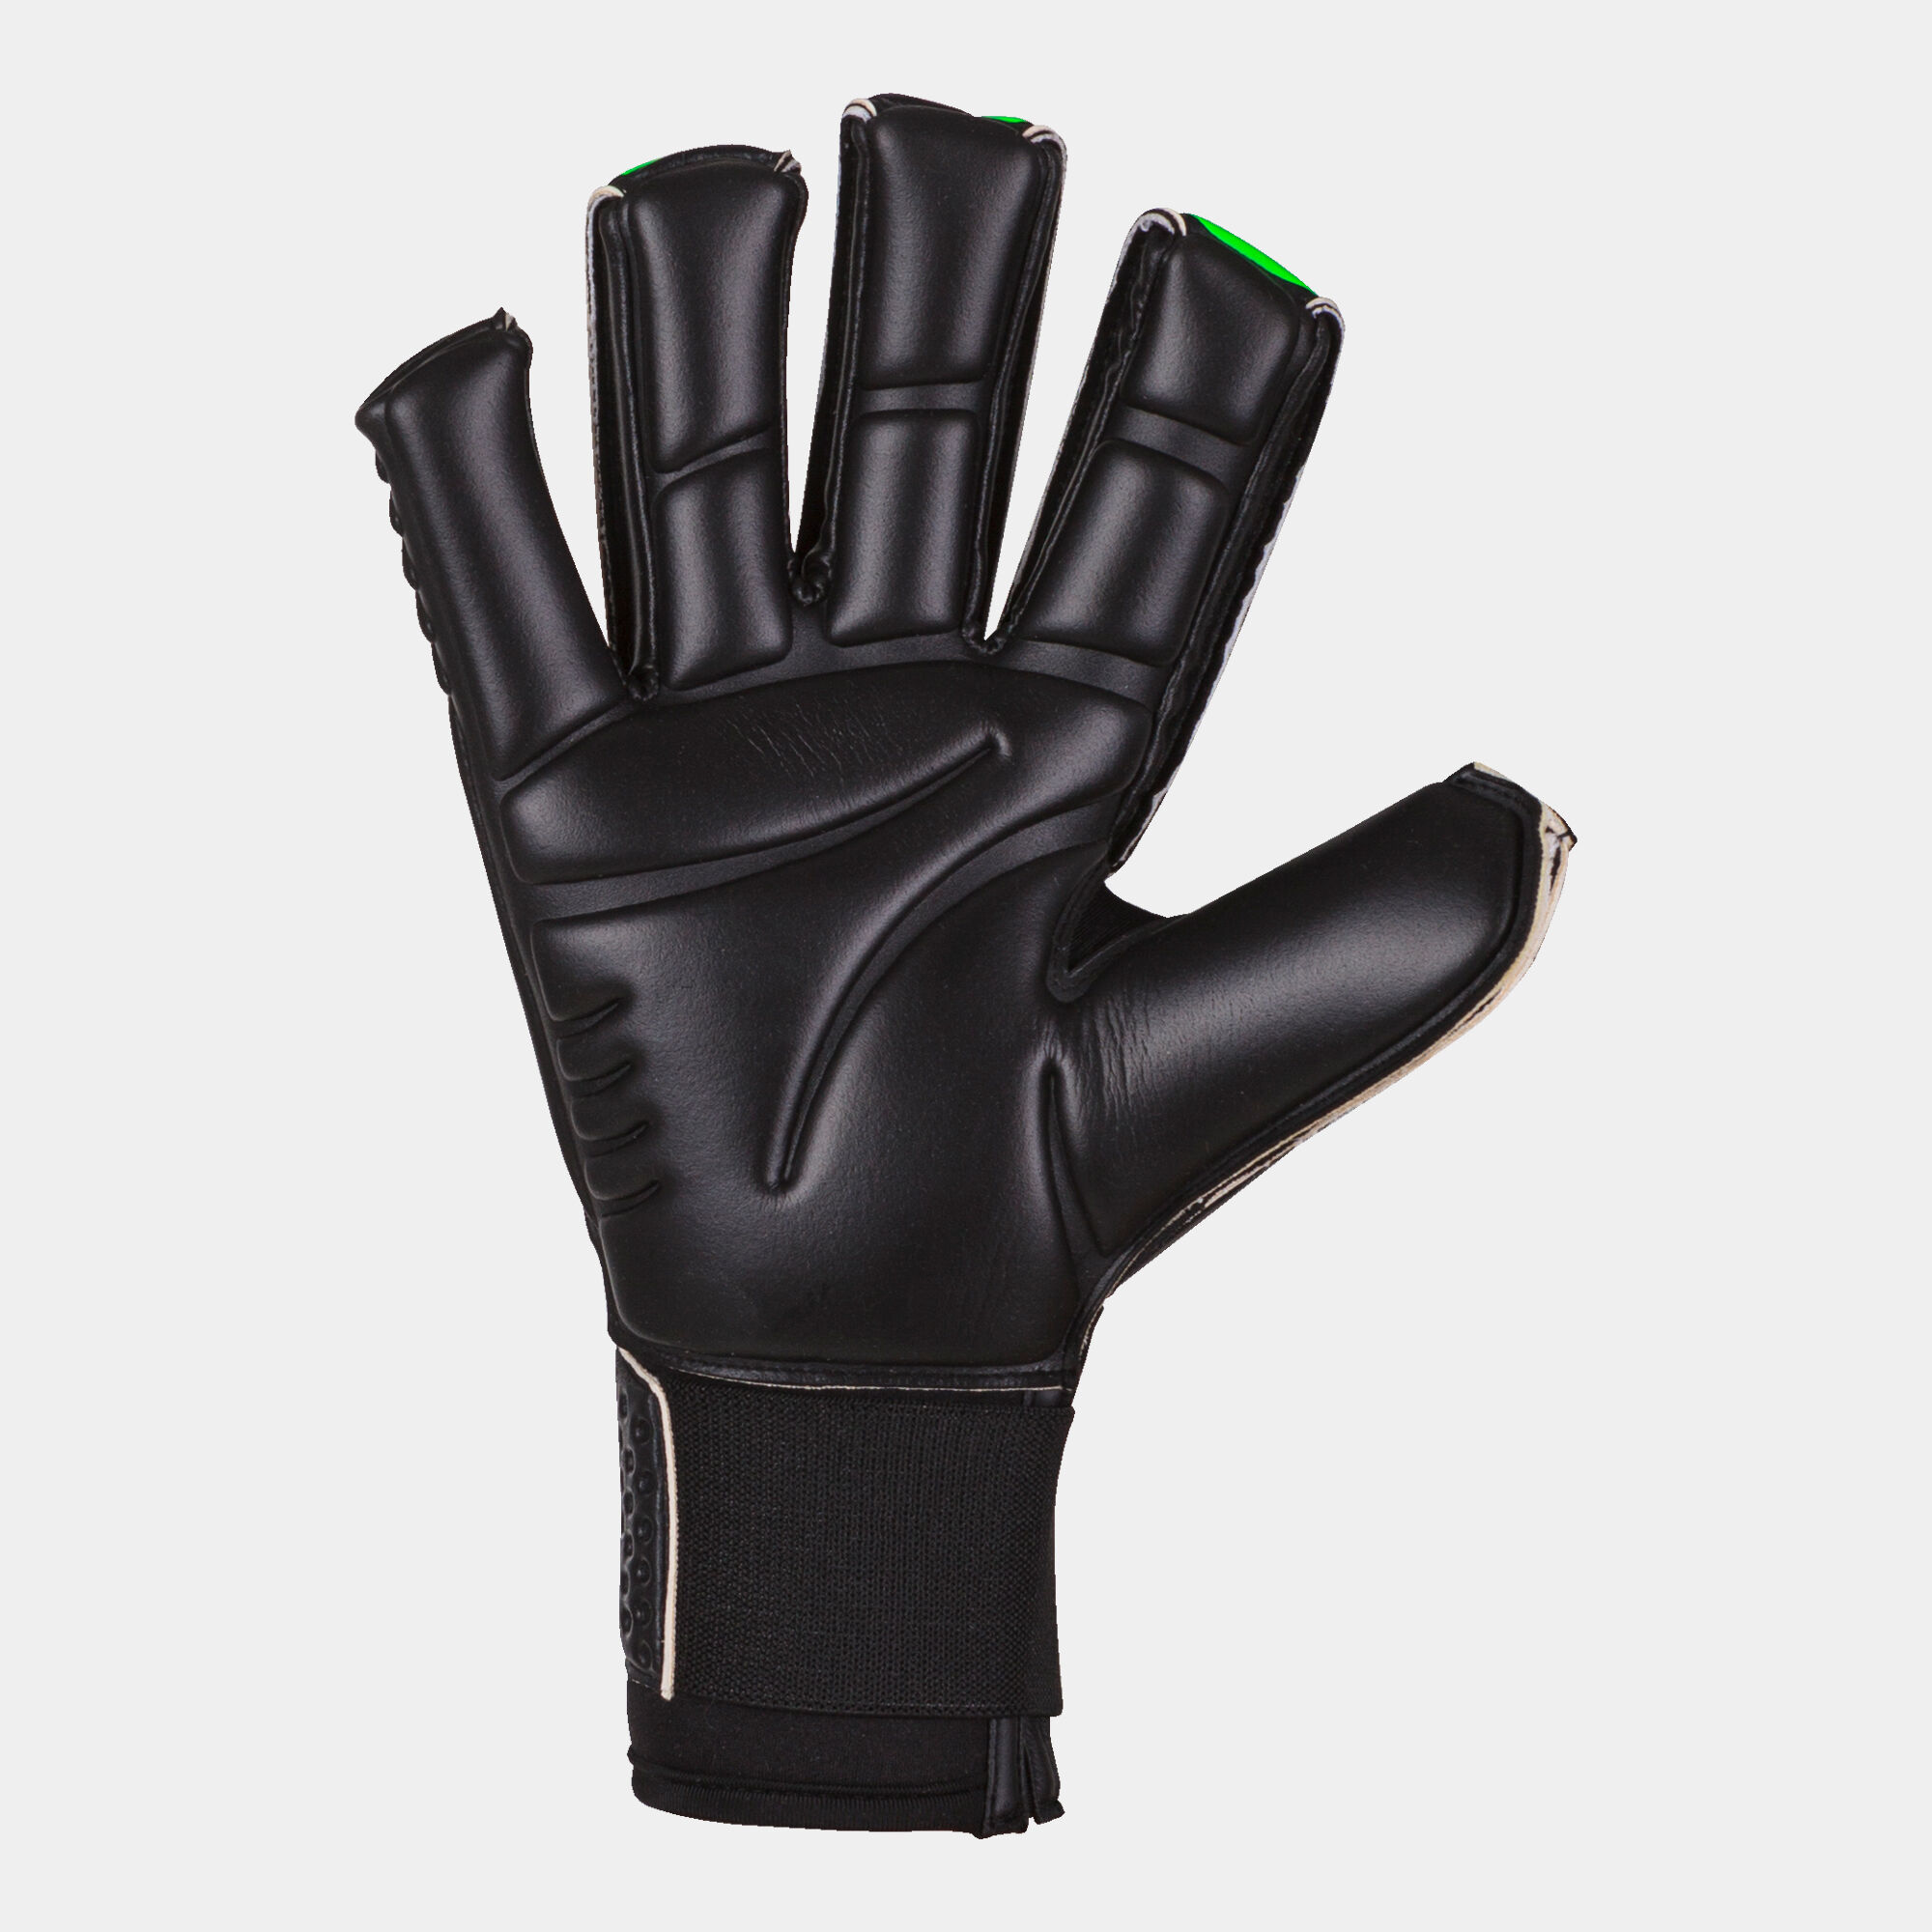 Football goalkeeper gloves Area 19 black fluorescent green